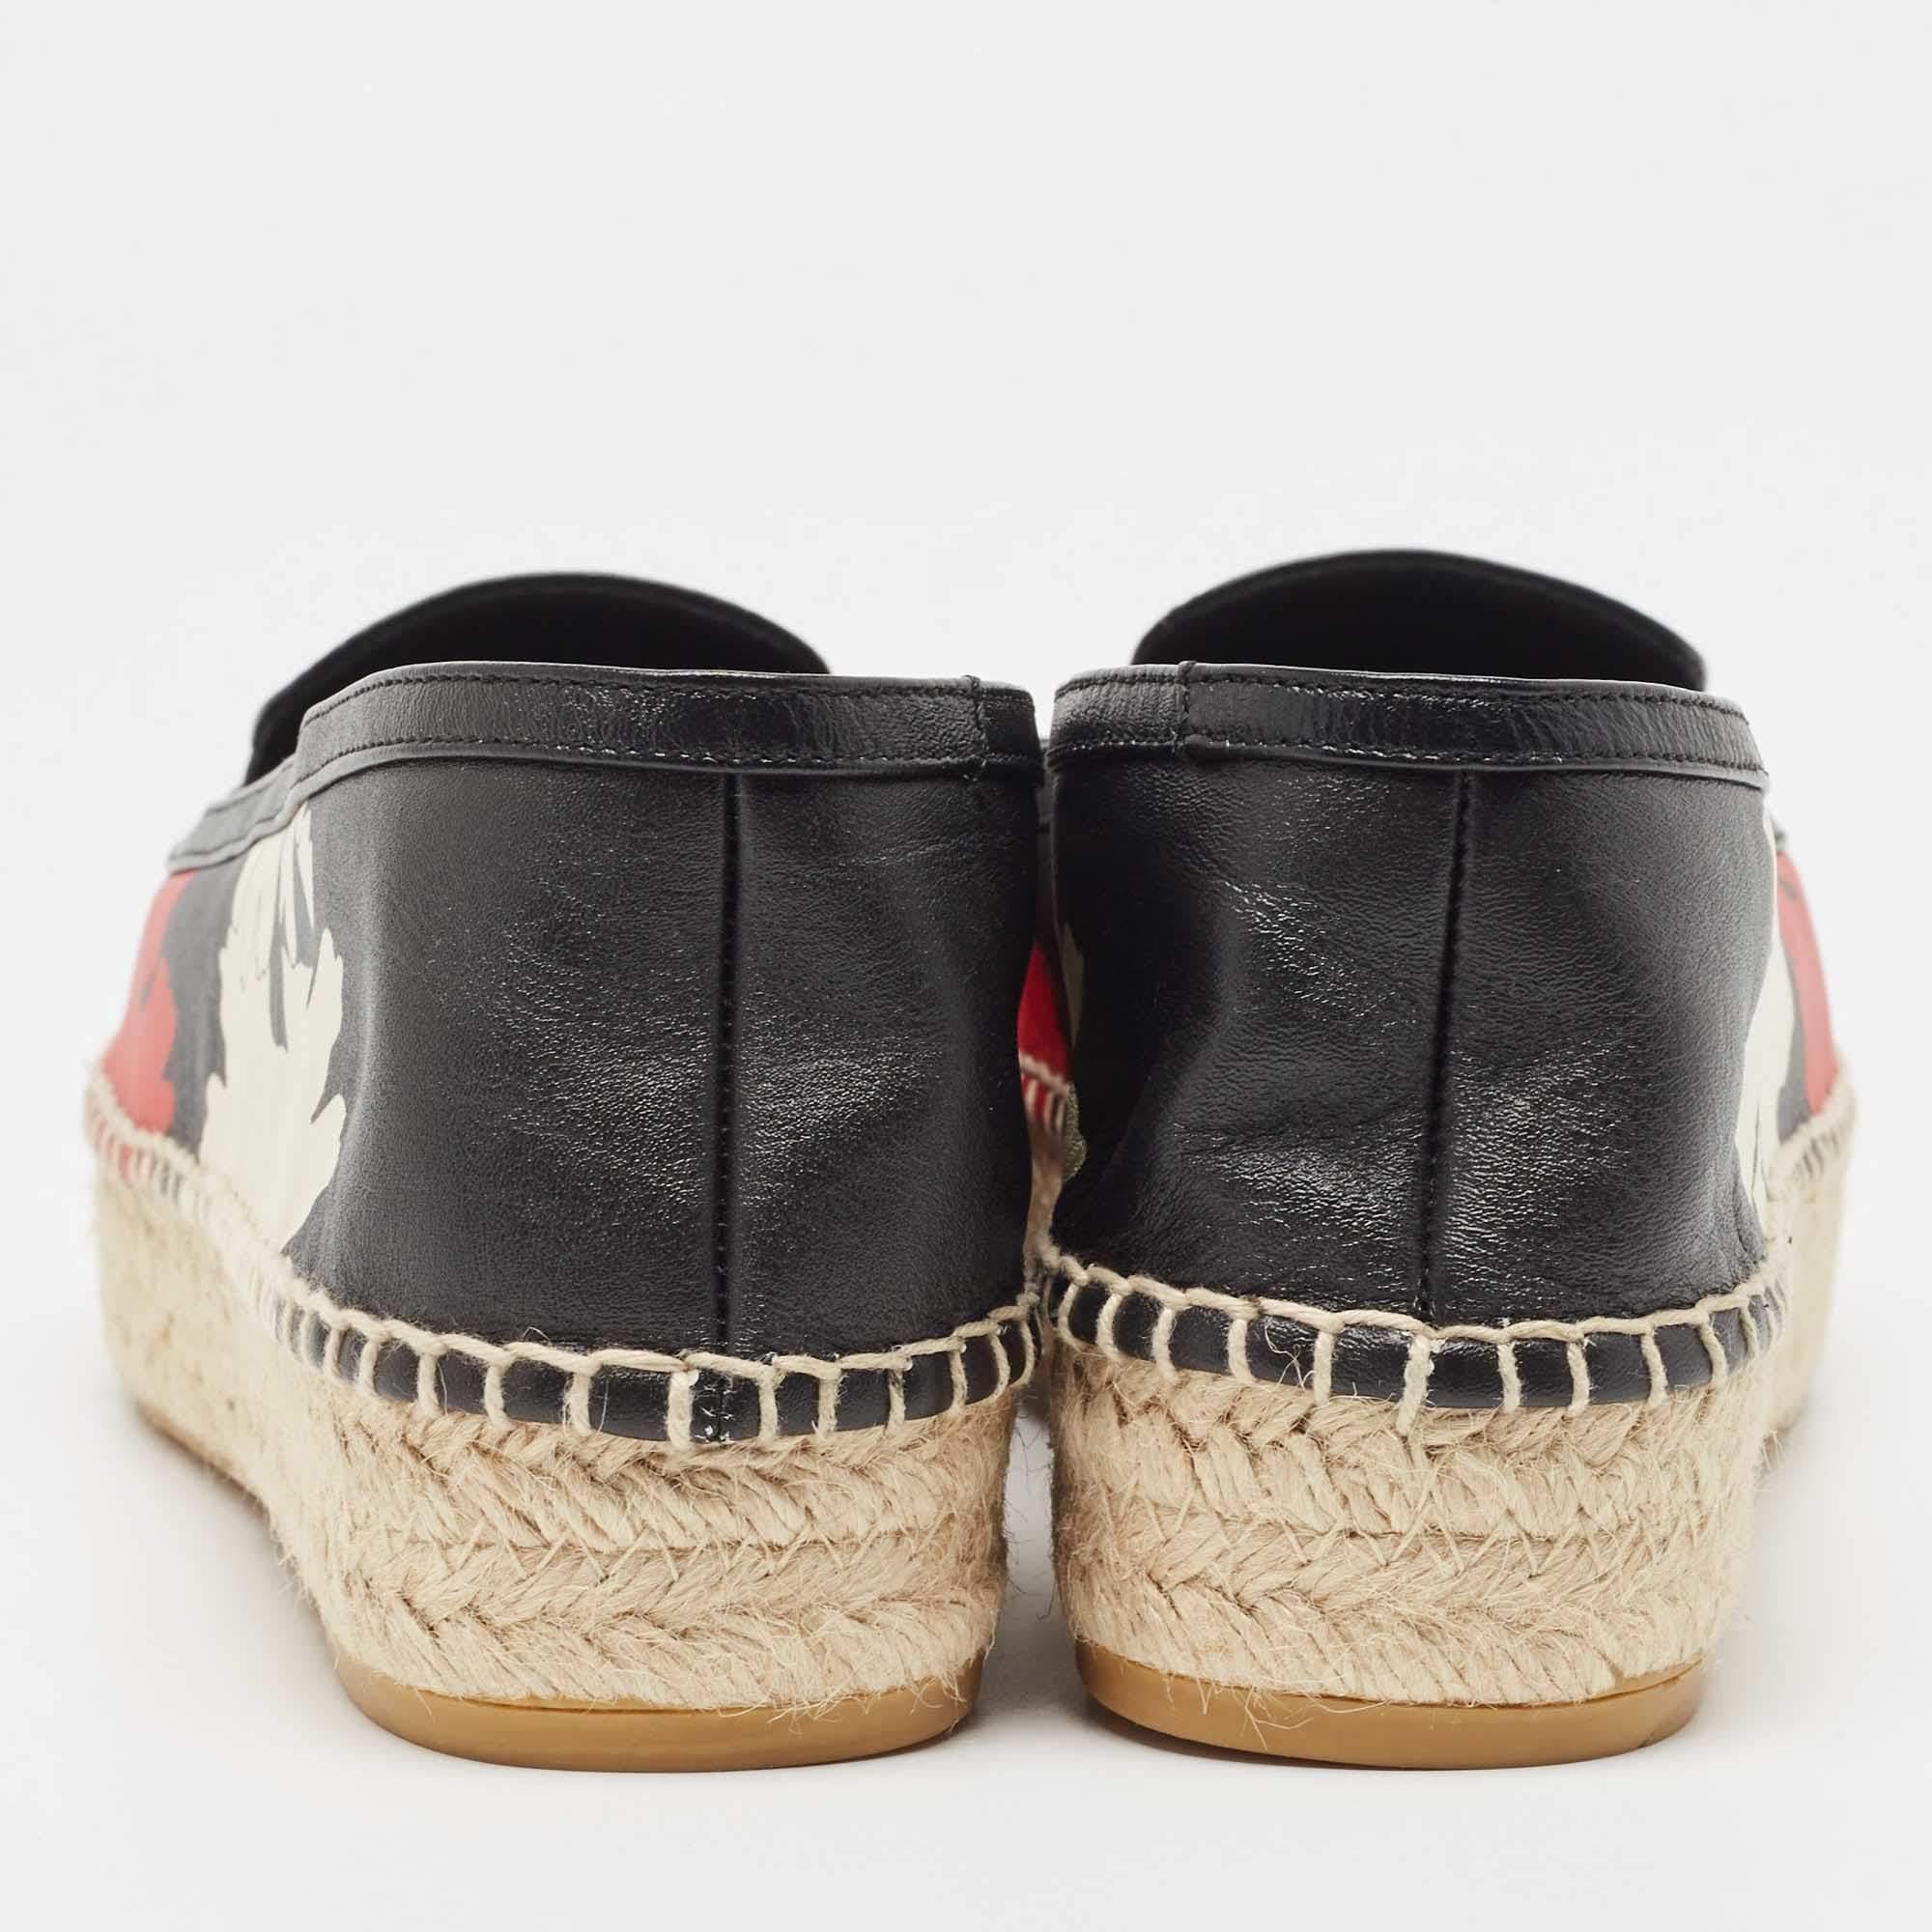 Alexander McQueen Tricolor Leather Espadrille Flats Size 40 1